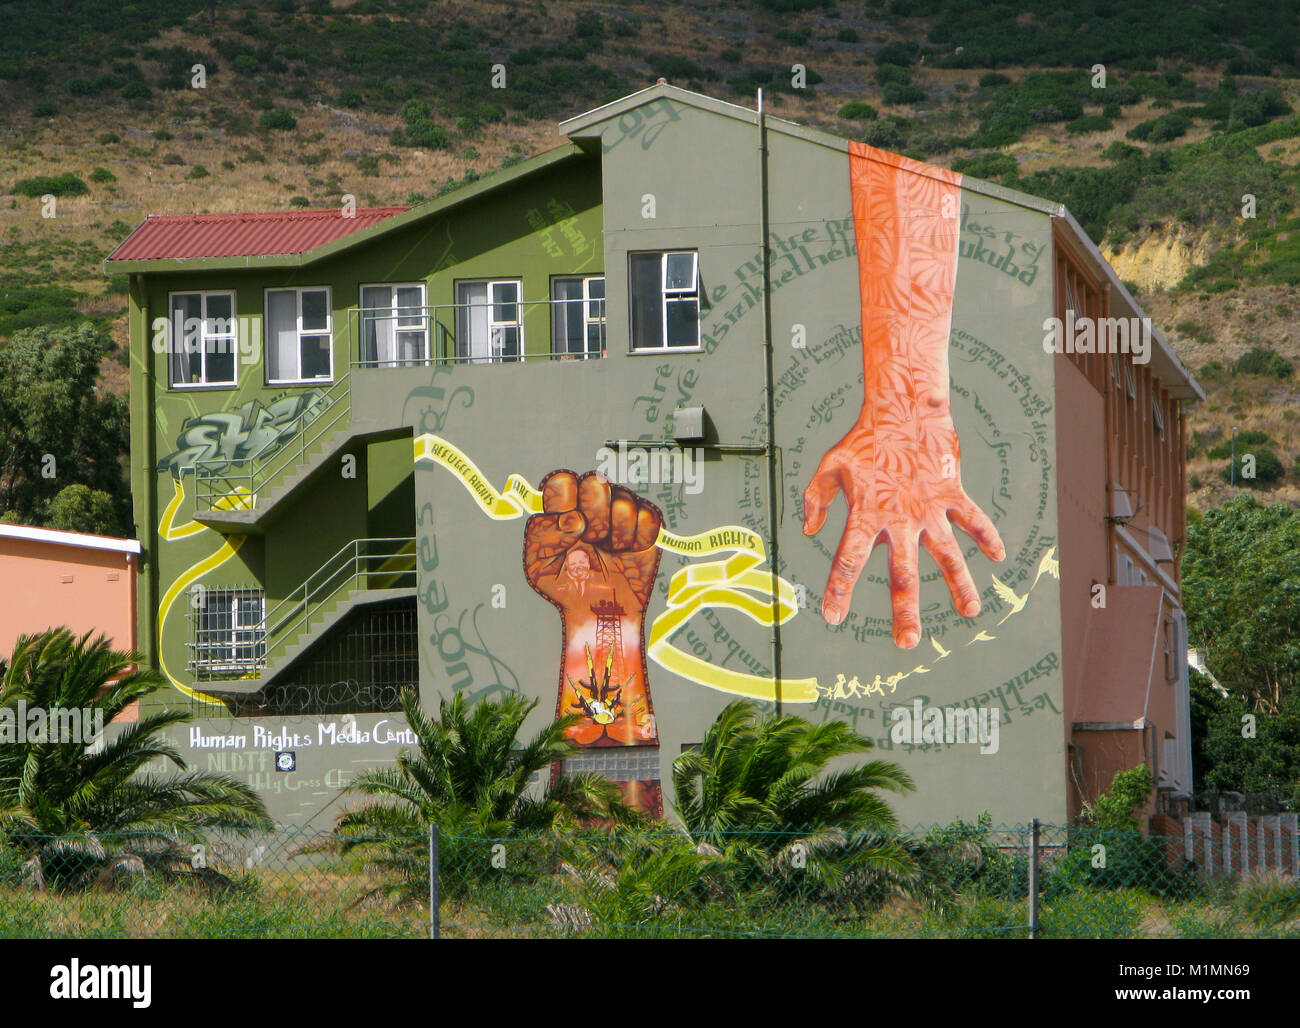 Diritti umani Media Center, Cape Town, Sud Africa Foto Stock